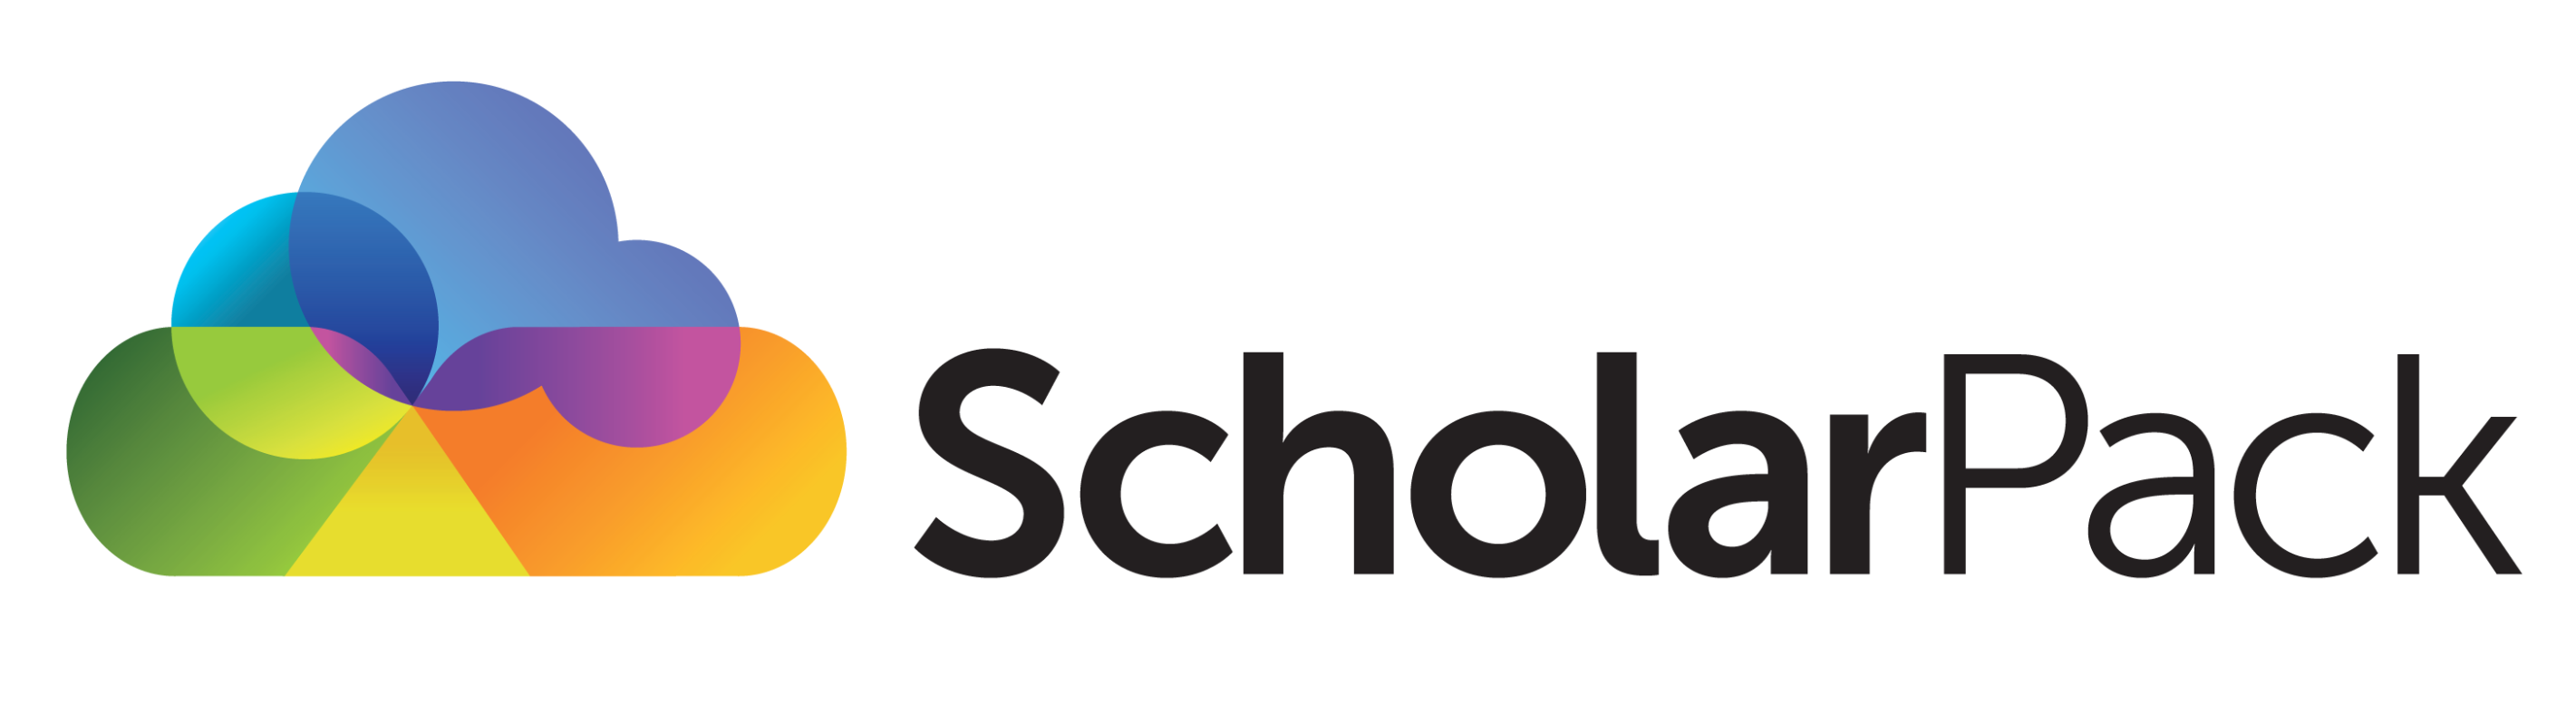 scholar-pack-logo-crop